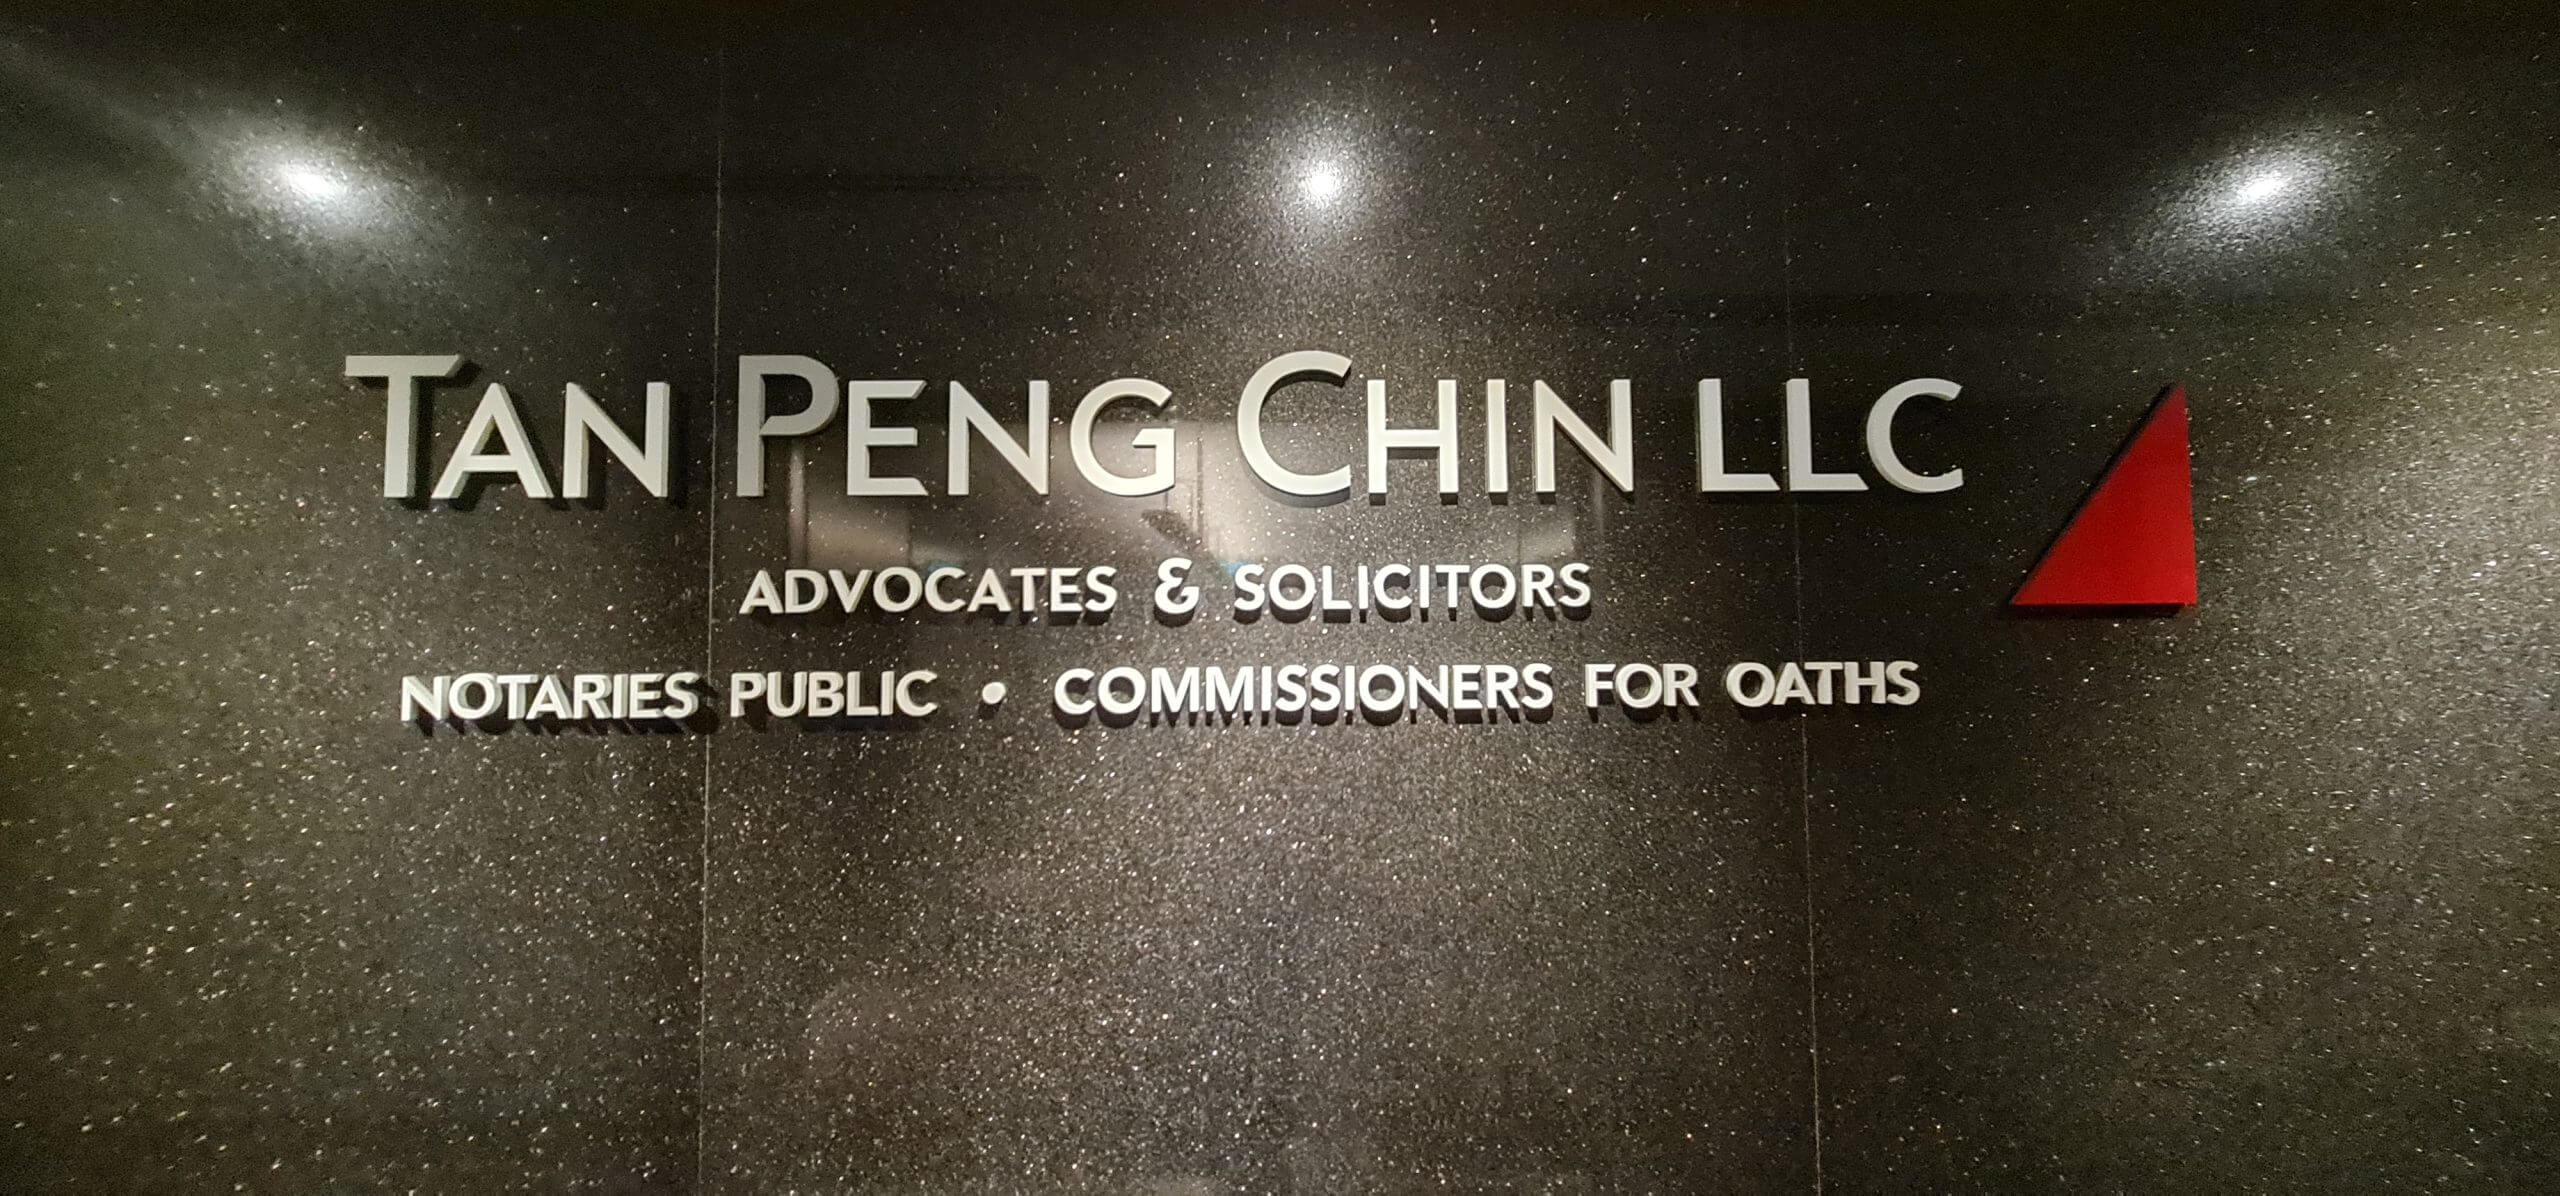 Tan Peng Chin LCC.